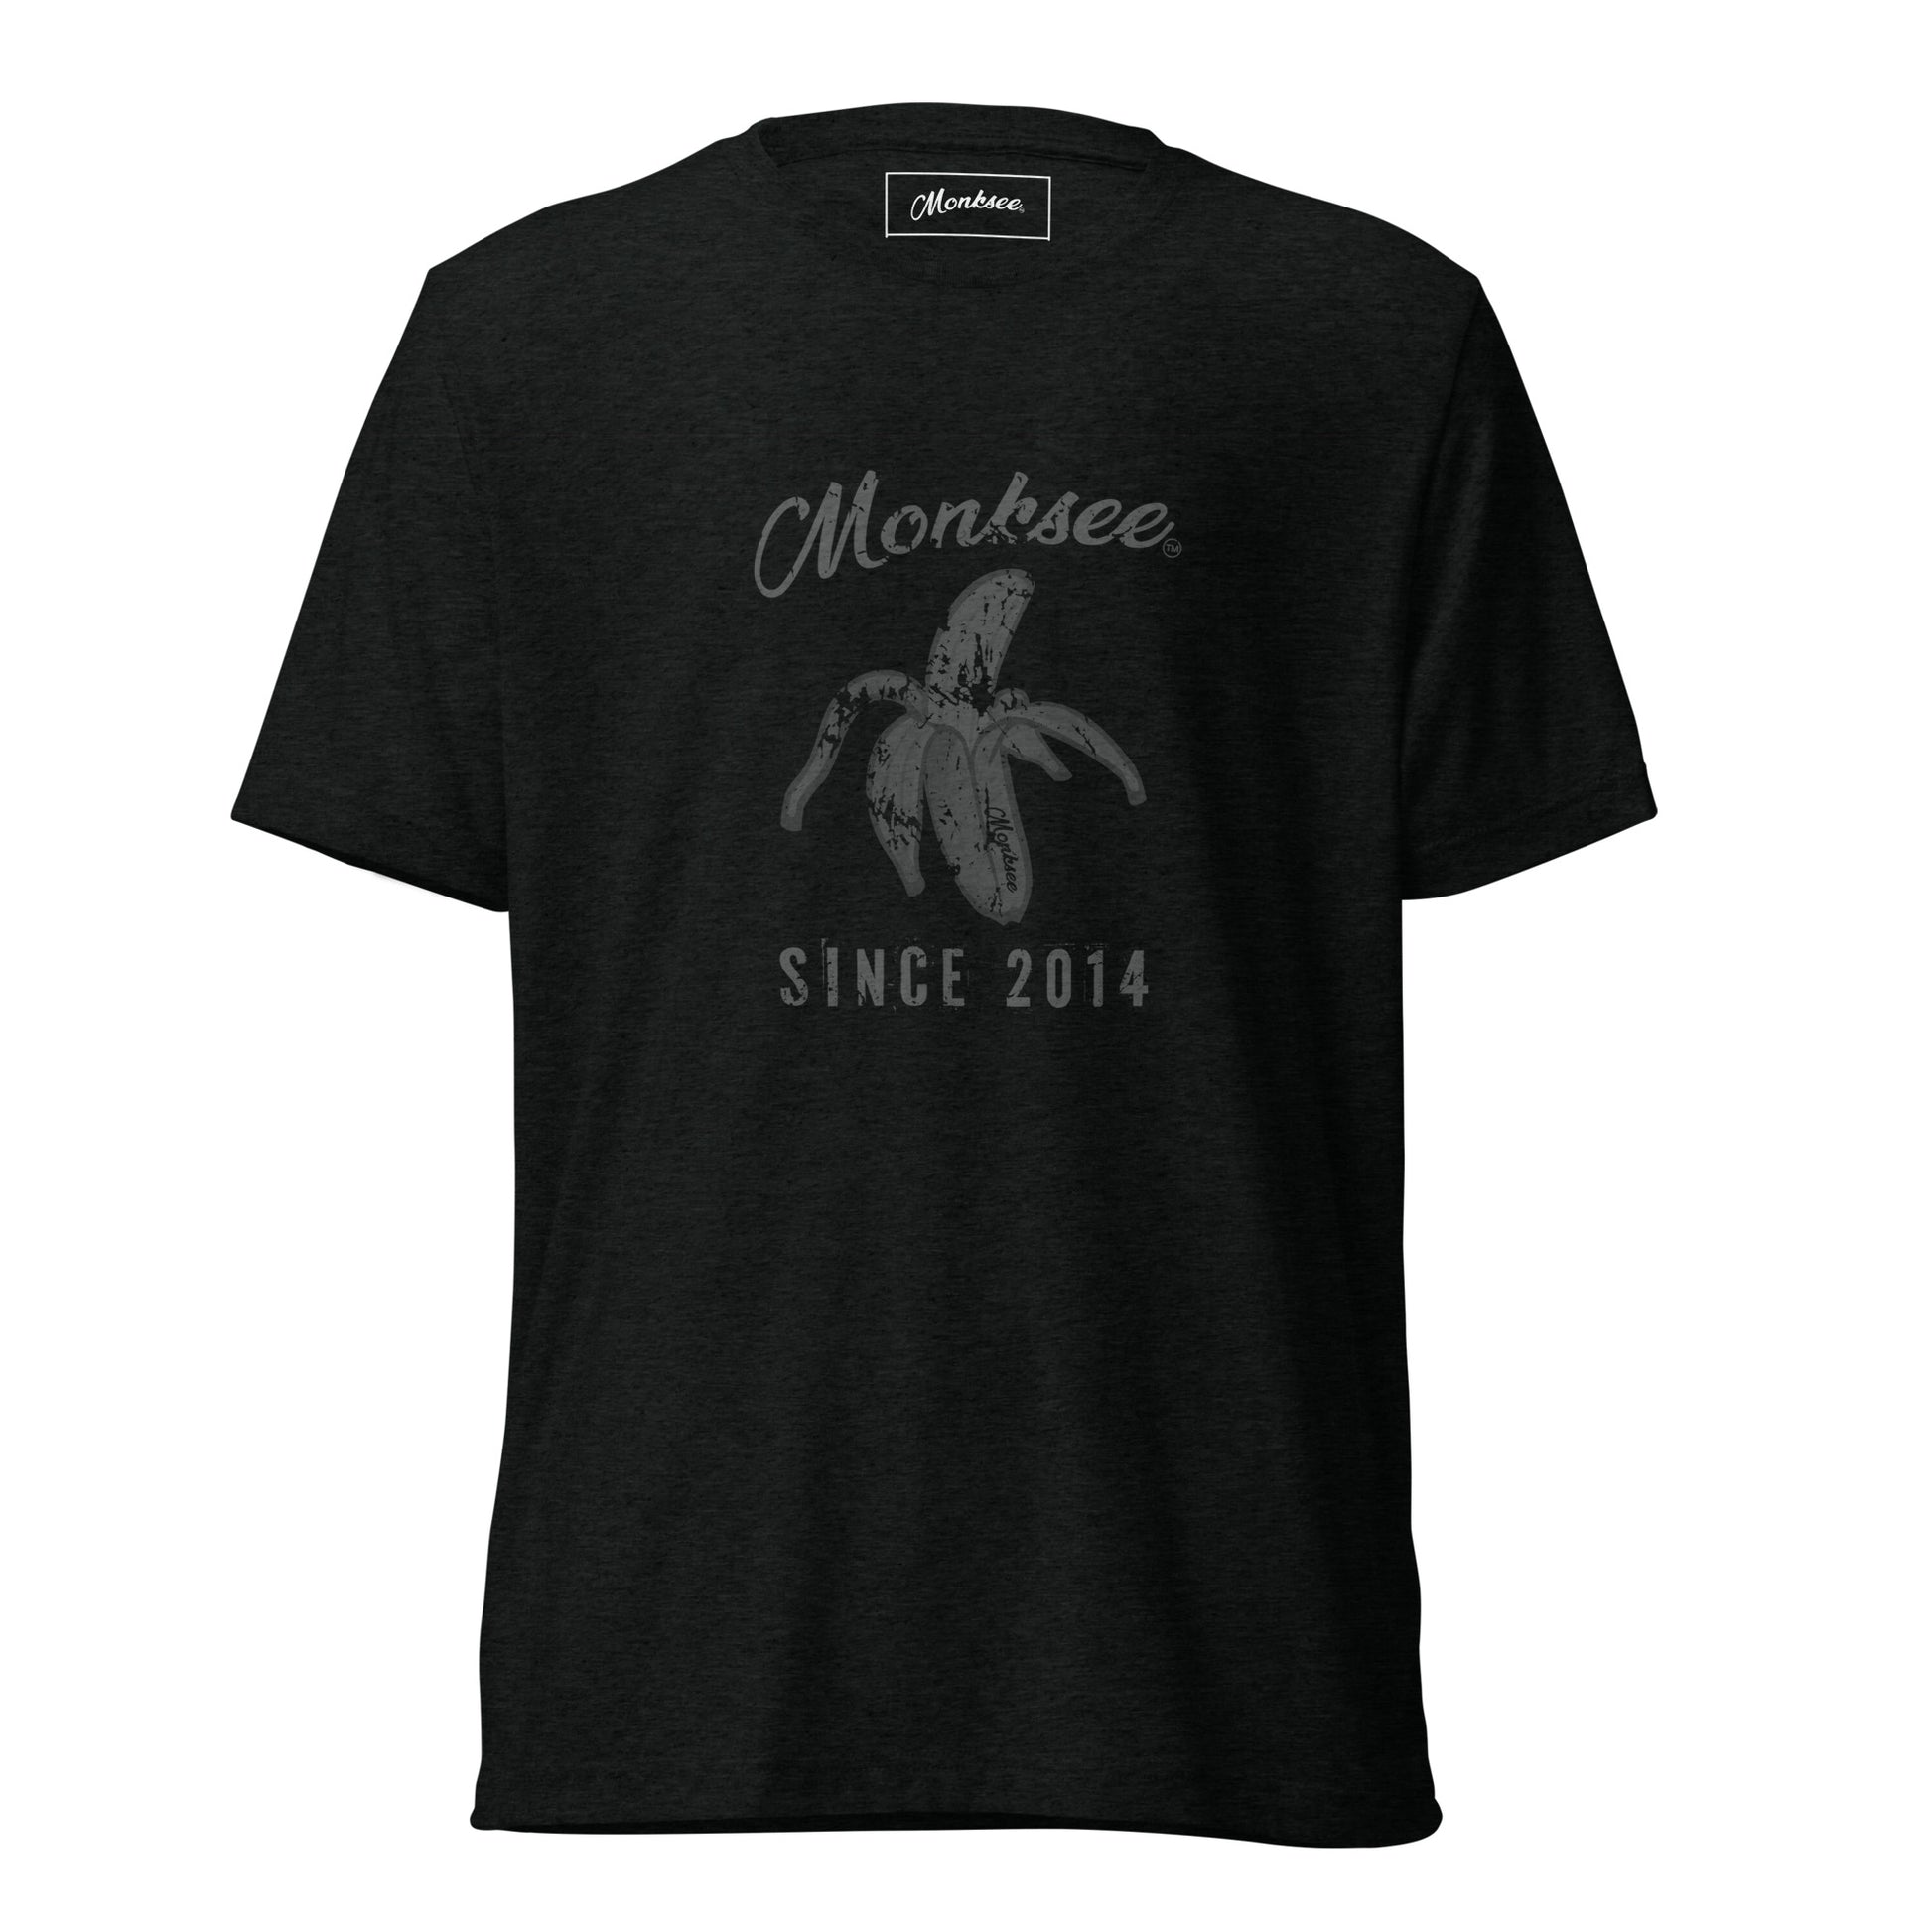 Vintage Monksee t-shirt.